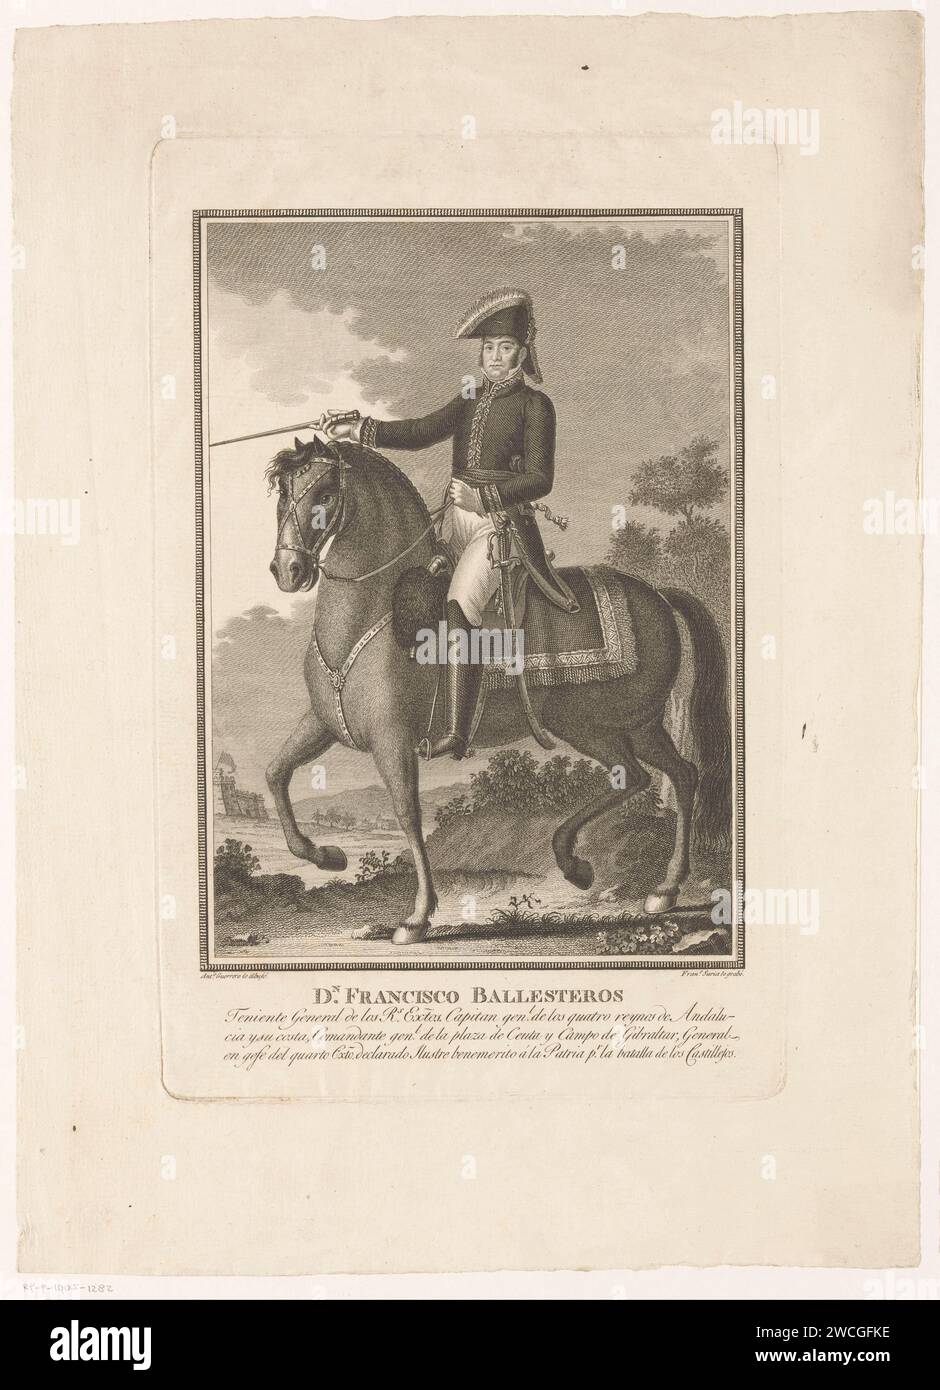 RUITORPORT VAN FRANCISCO BALLESTEROS, FRANCISCO SURÍA, AFTER ANTONIO GUERRERO, 1797 - 1836 print  Spain paper etching historical persons. equestrian state-portrait Stock Photo